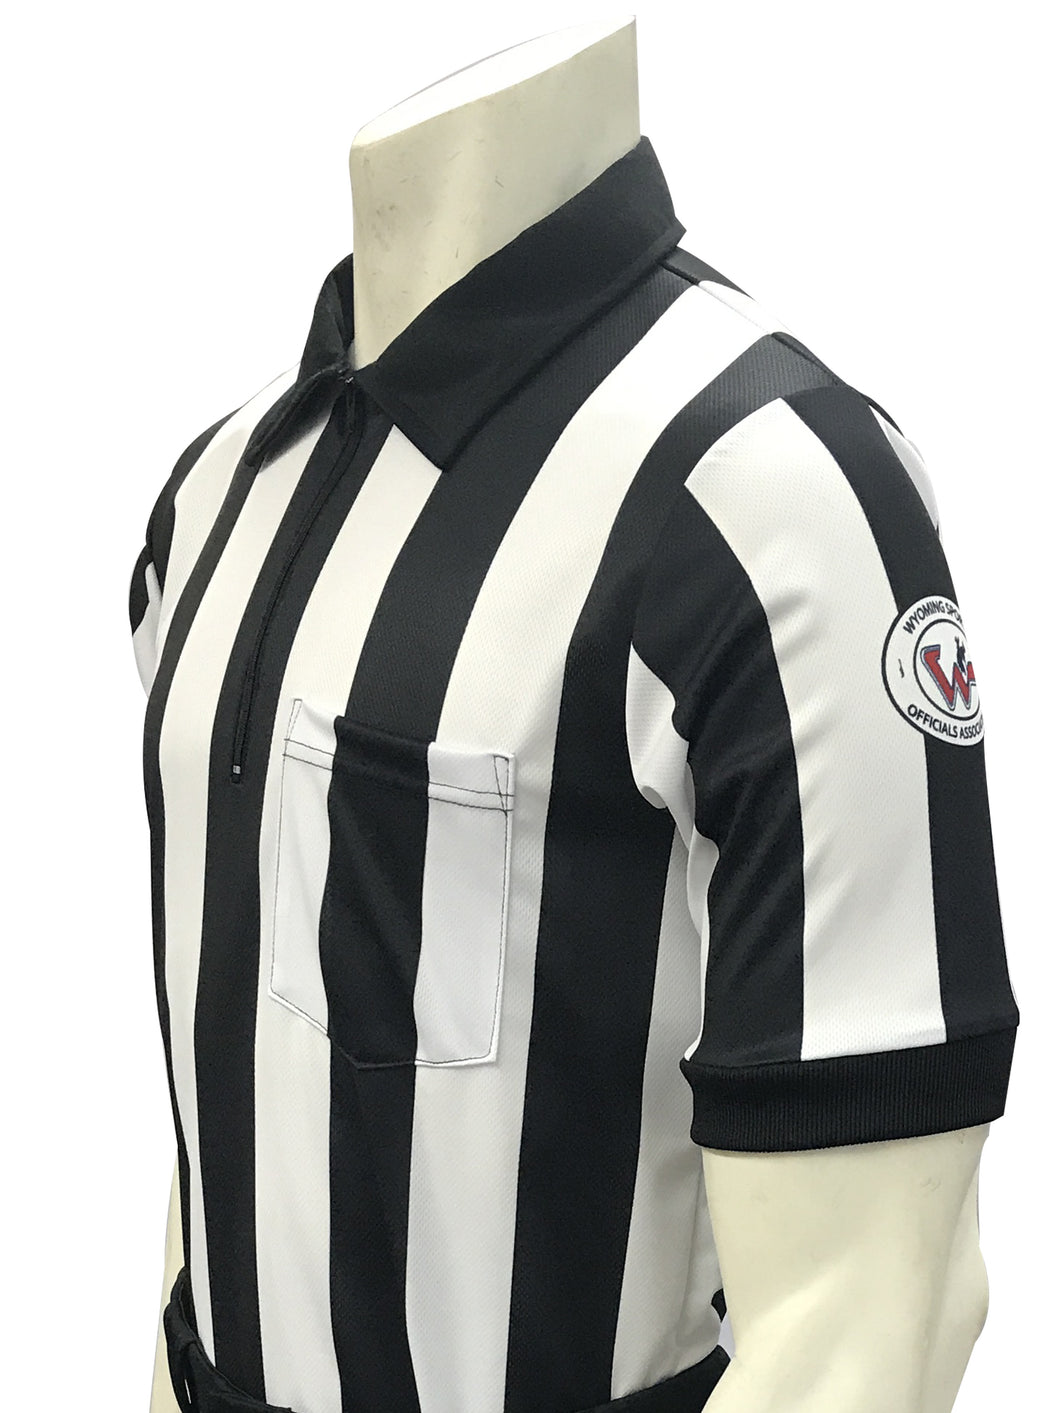 USA117WY - Made in USA - Dye Sub Wyoming Football Short Sleeve Shirt